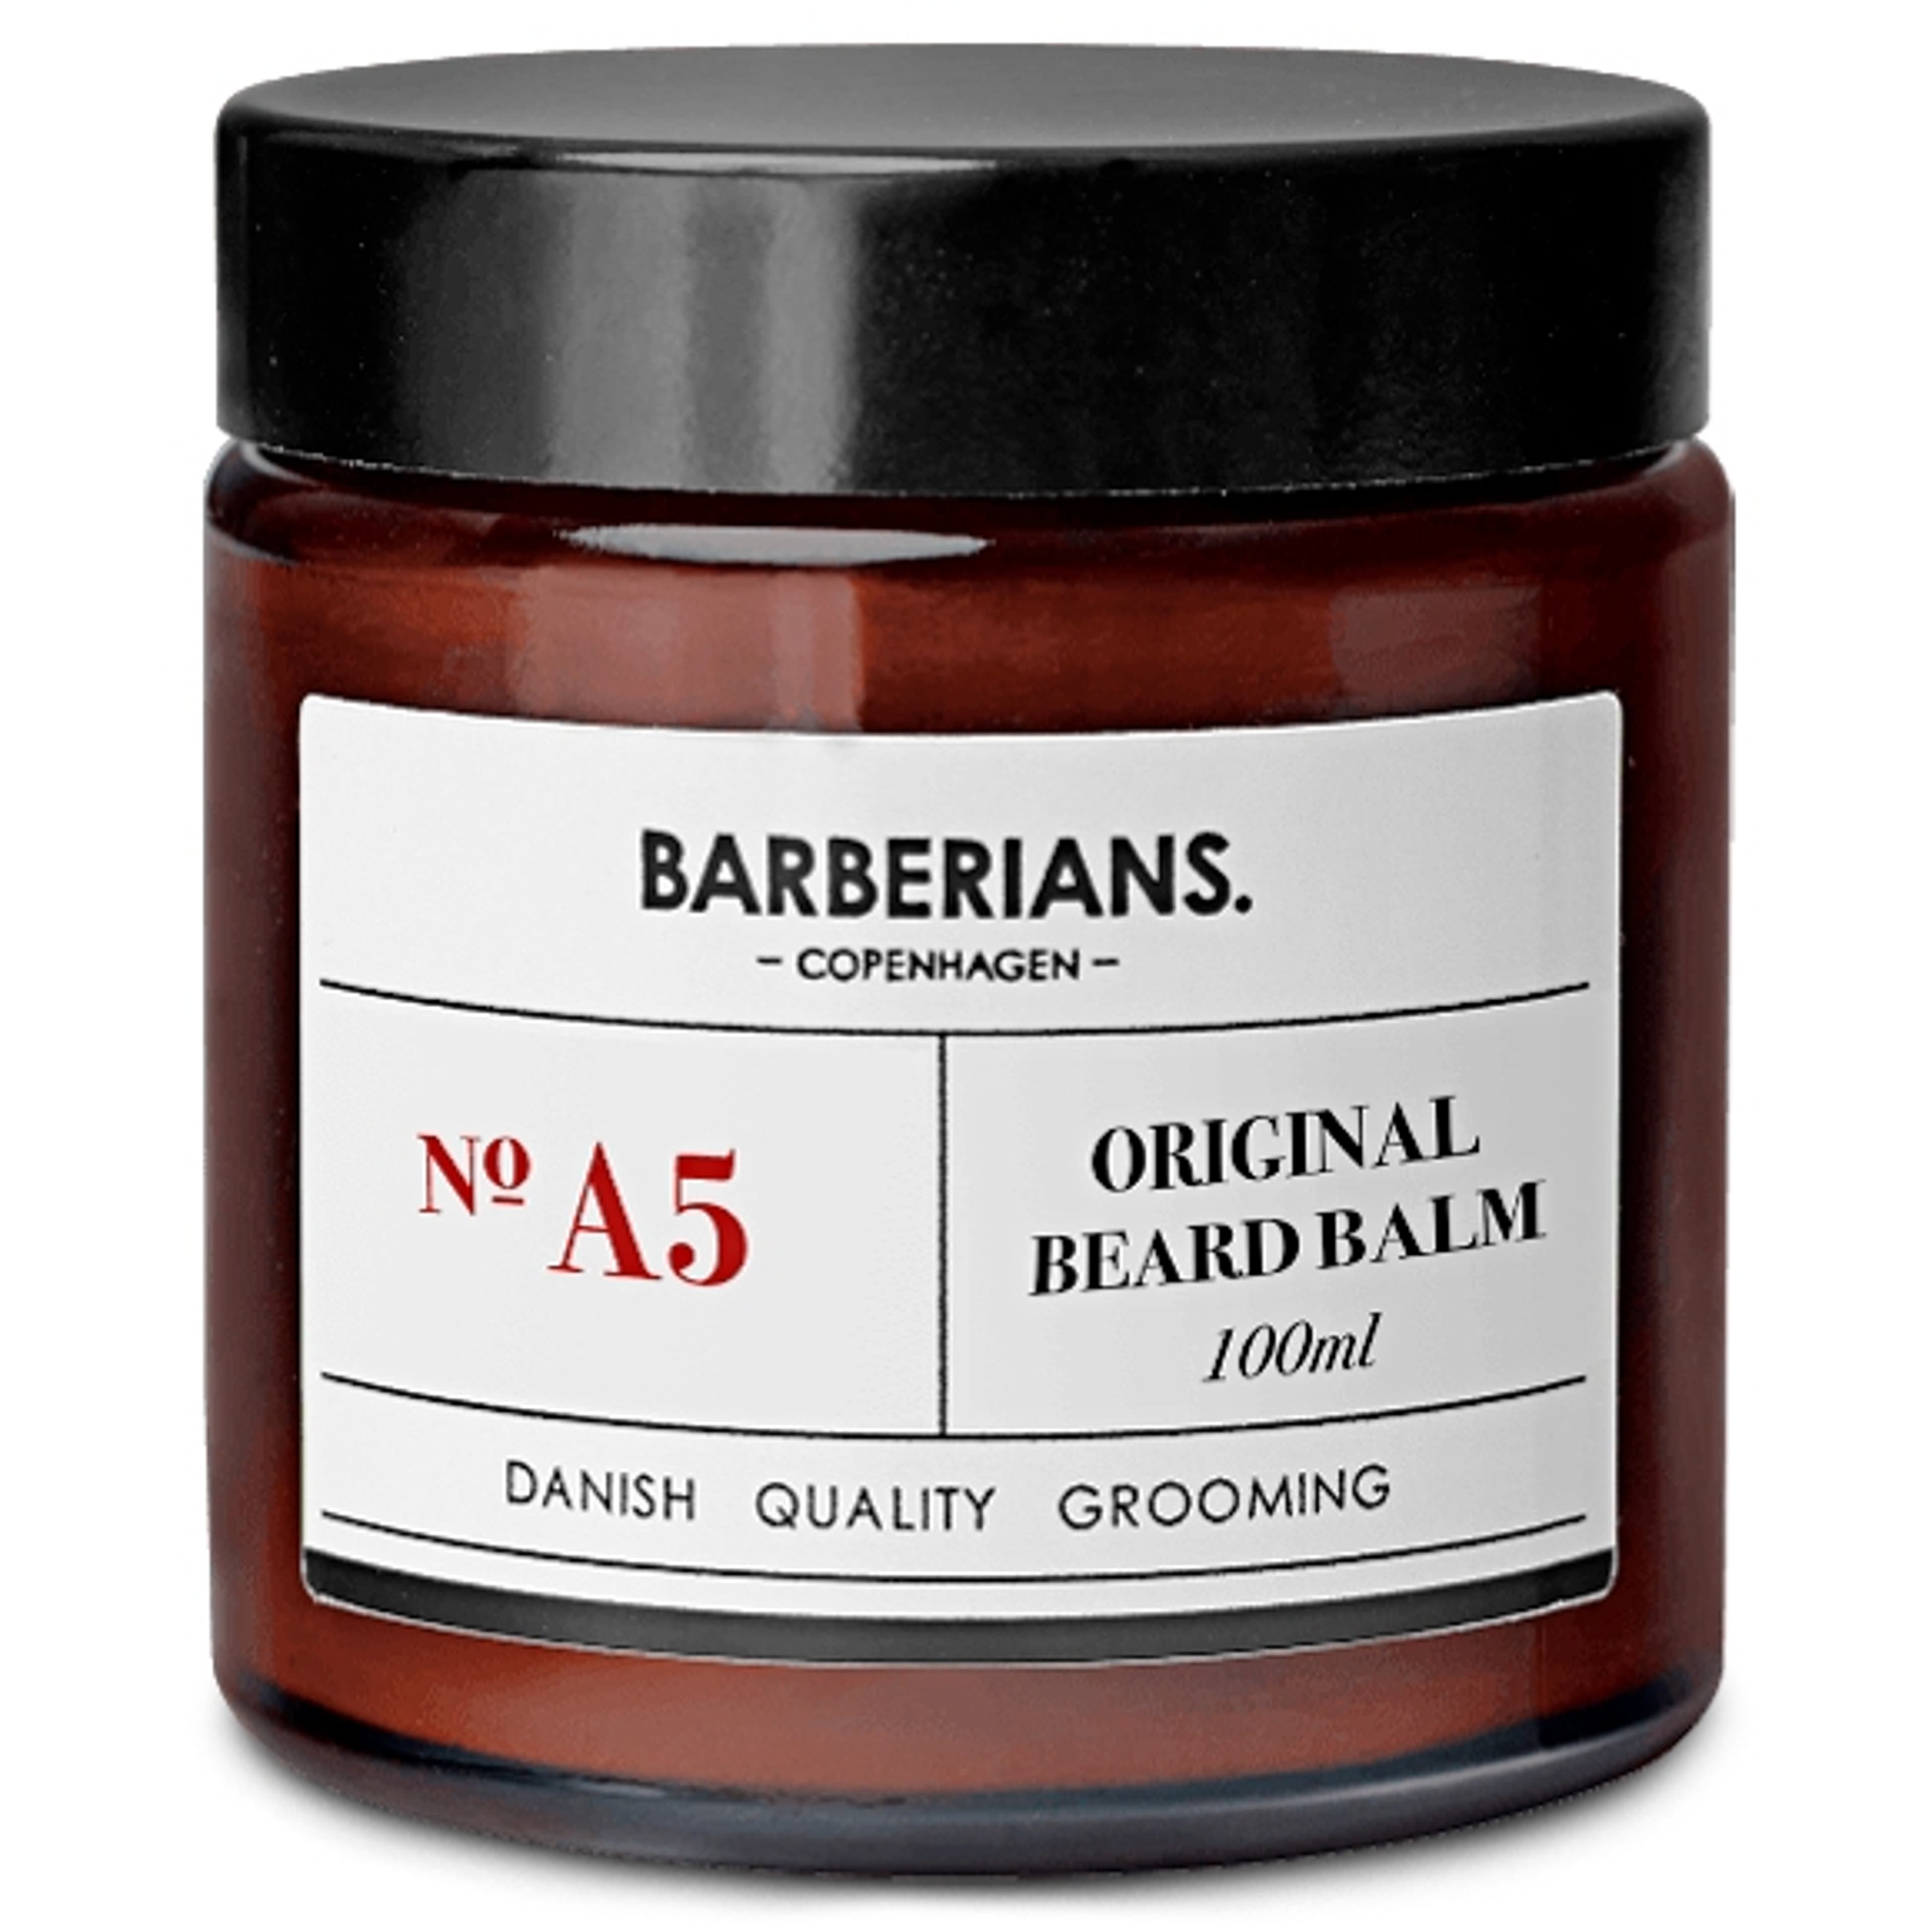 
Barberians - Bálsamo para Barba Original